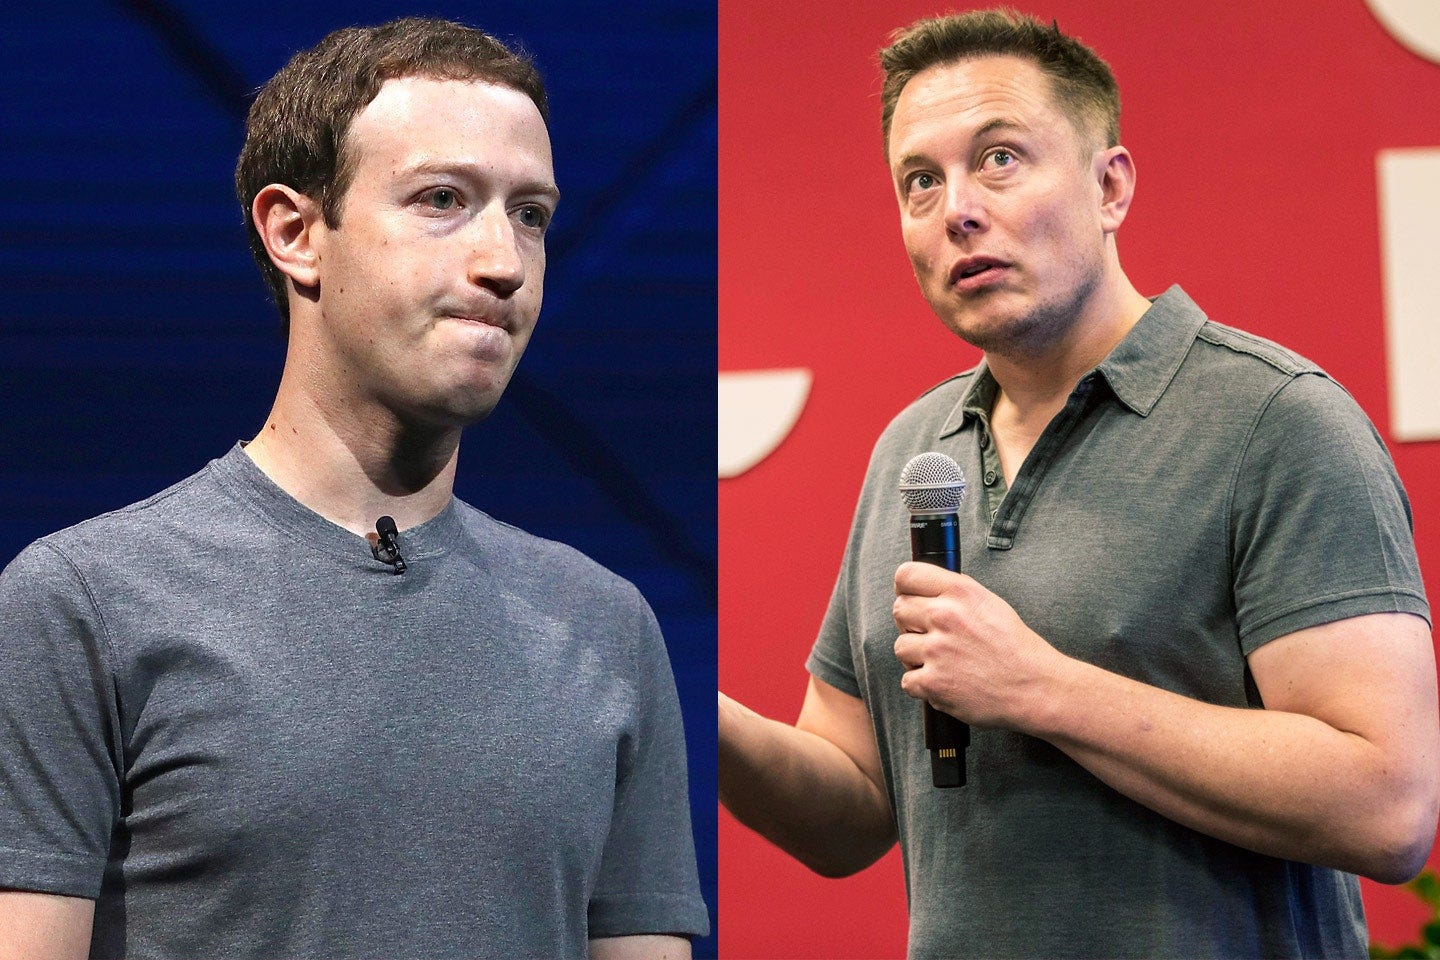 Irresponsible”: Mark Zuckerberg Slams Elon Musk's “Doomsday” Attitude |  Vanity Fair